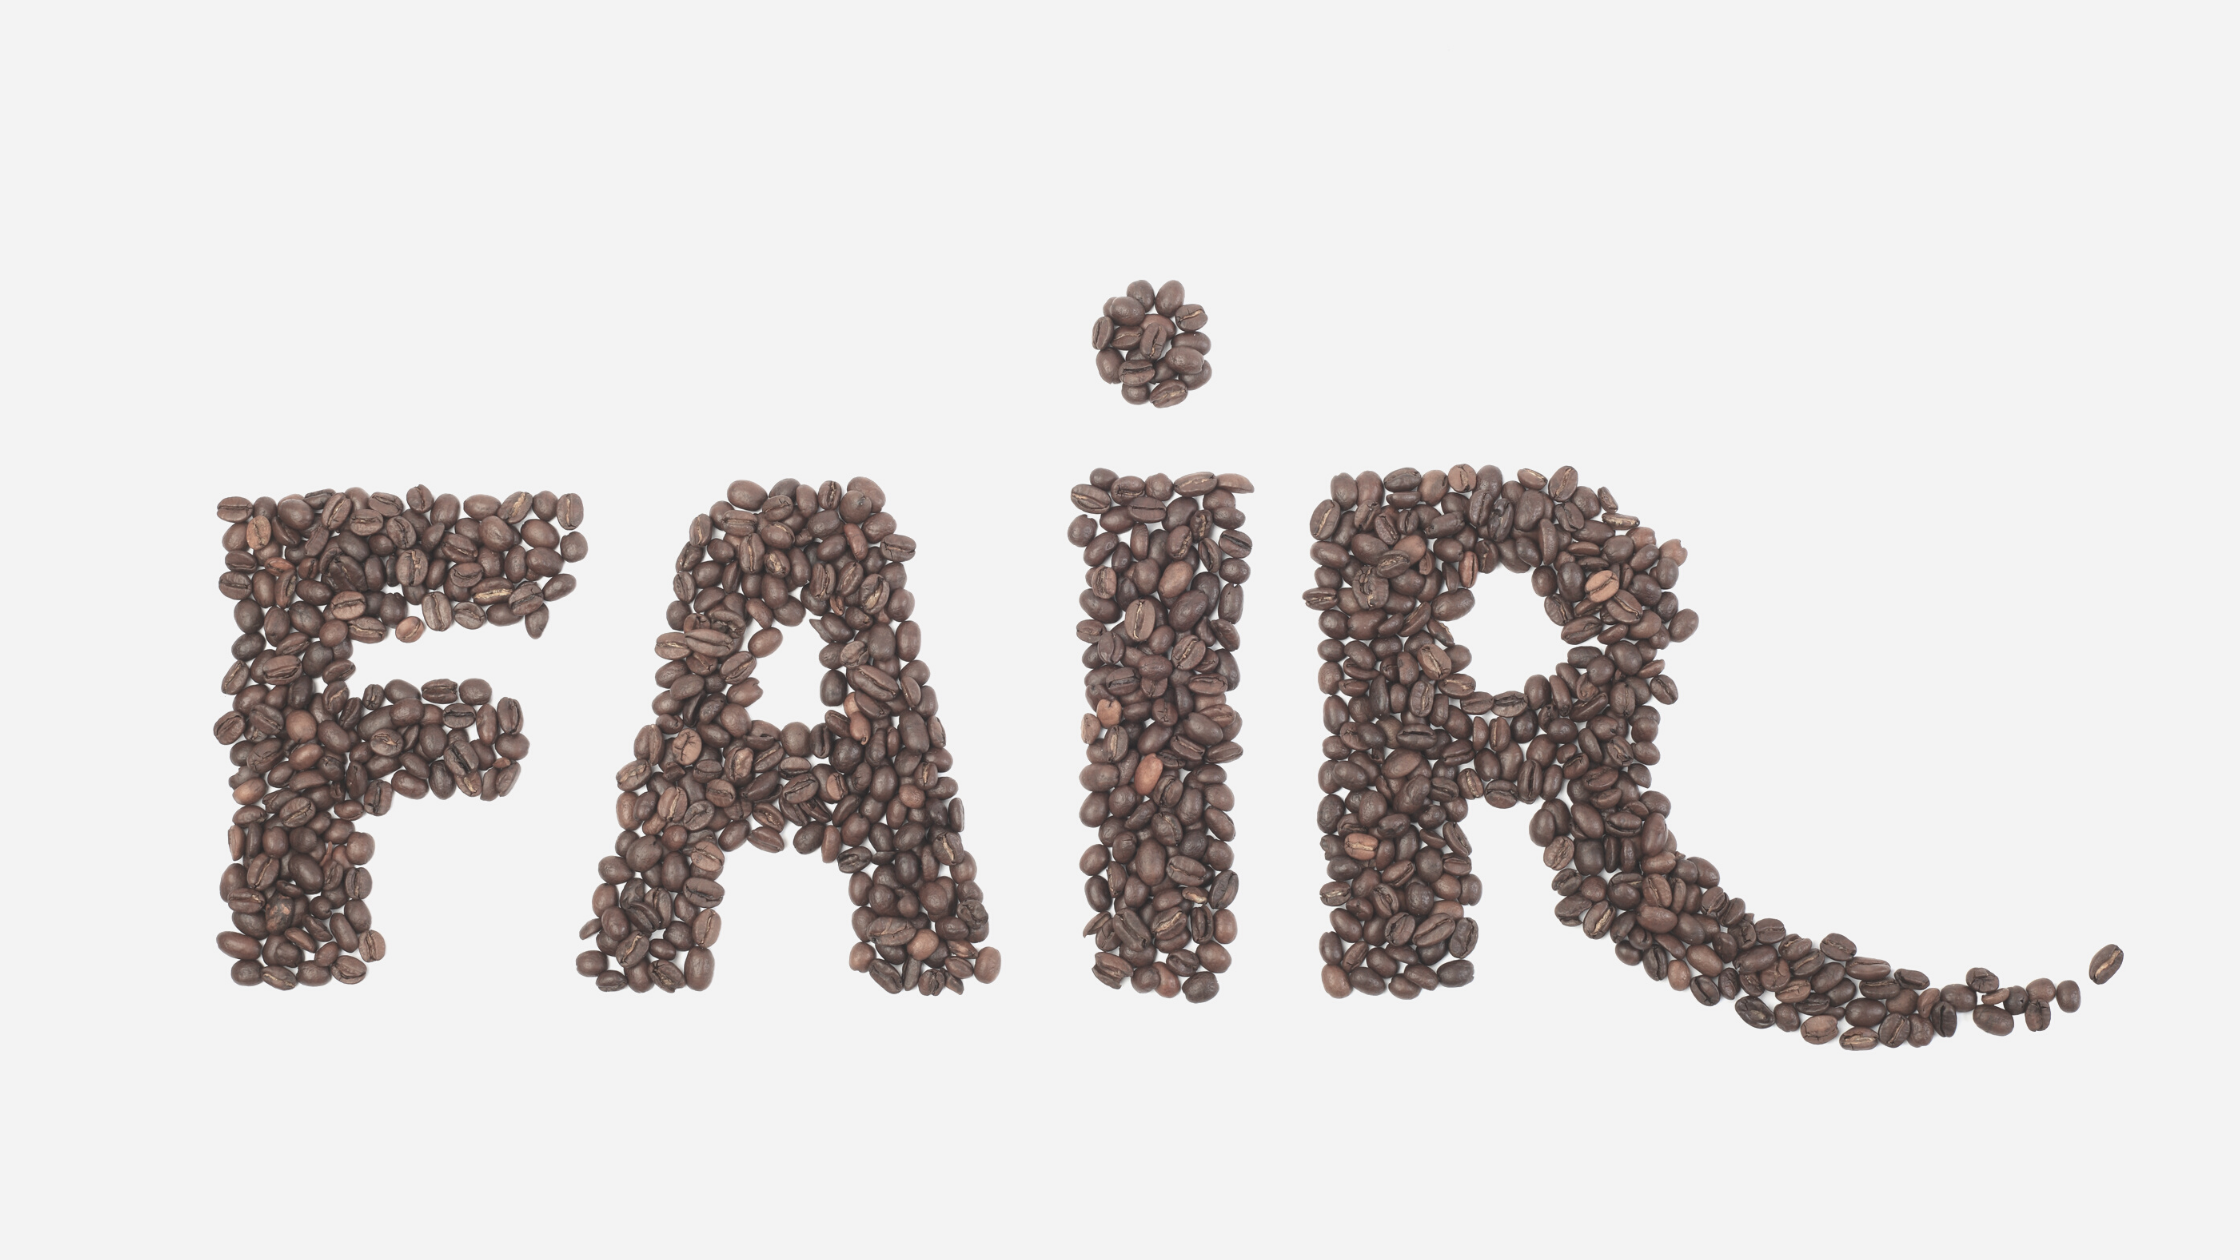 fair trade coffee brands